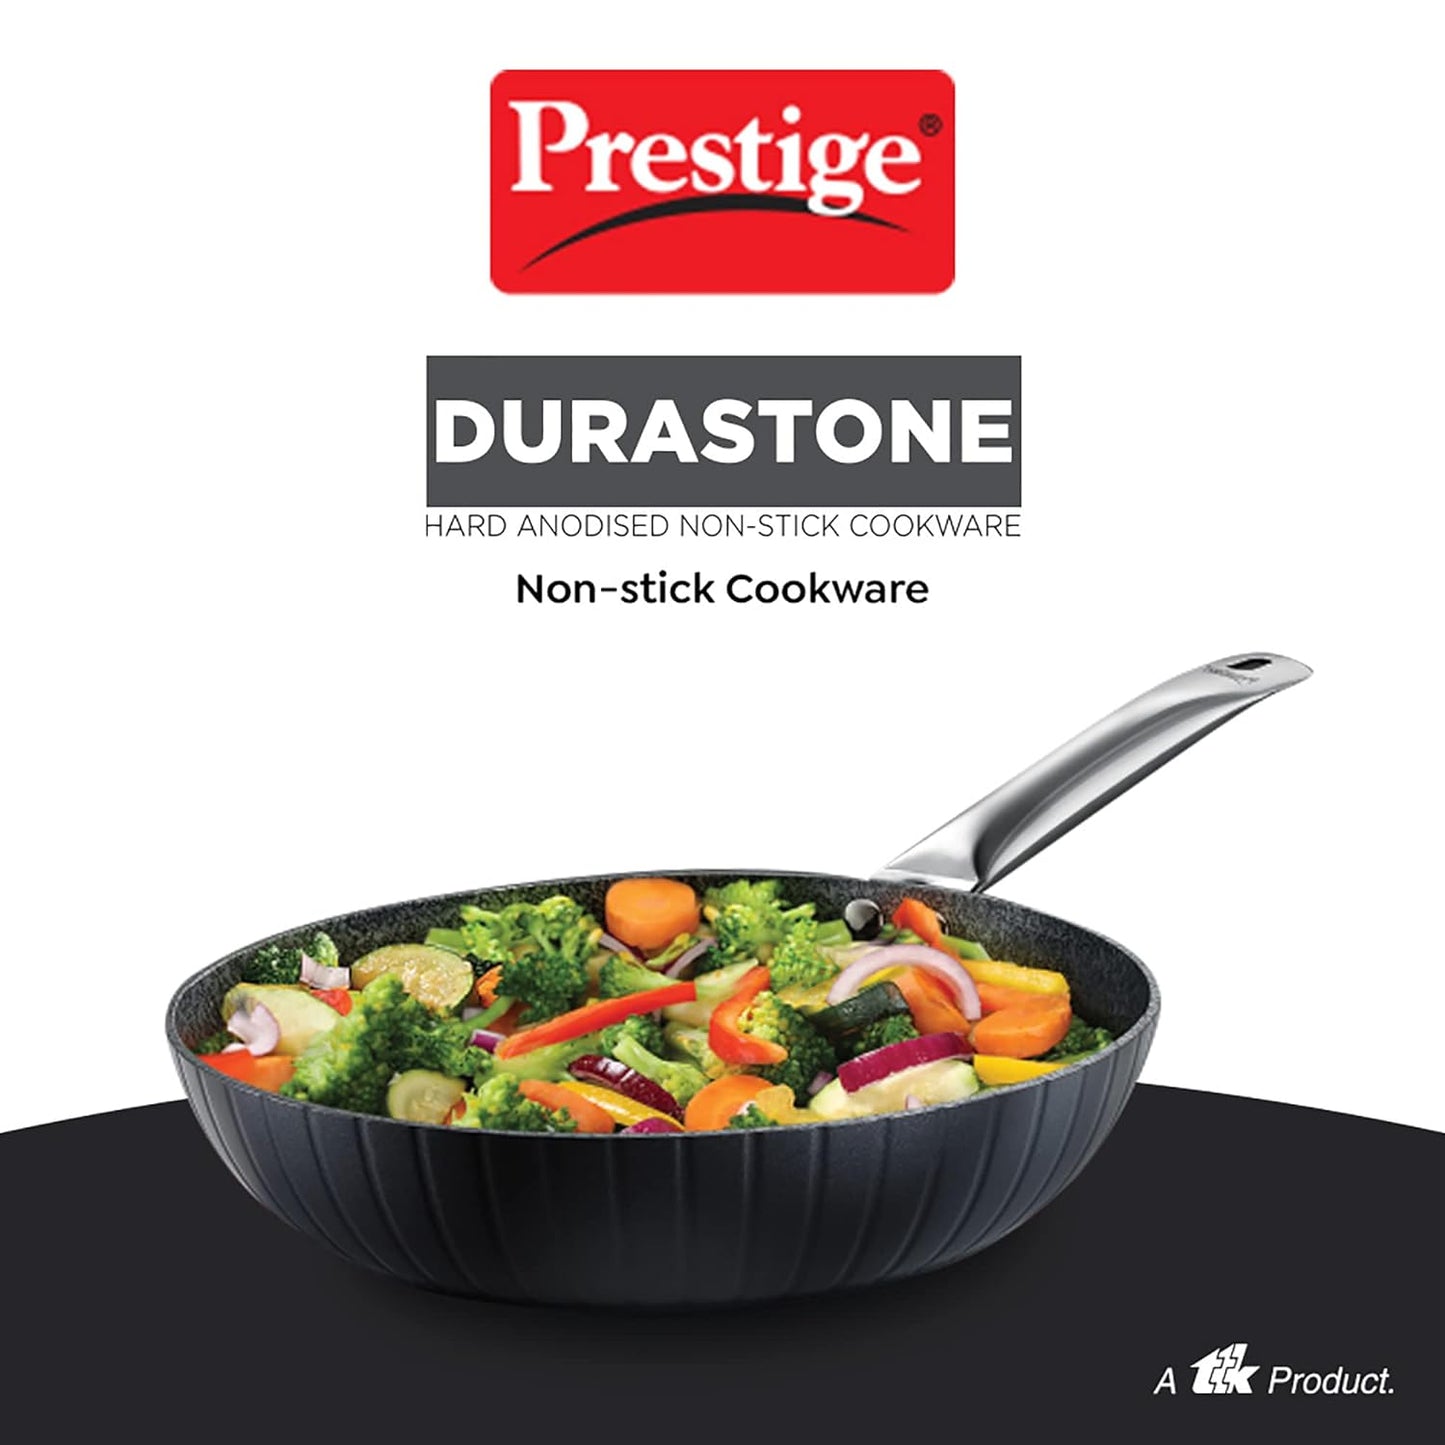 Prestige Durastone Hard Anodised 6 Layer Non-Stick Fry Pan 24 cm